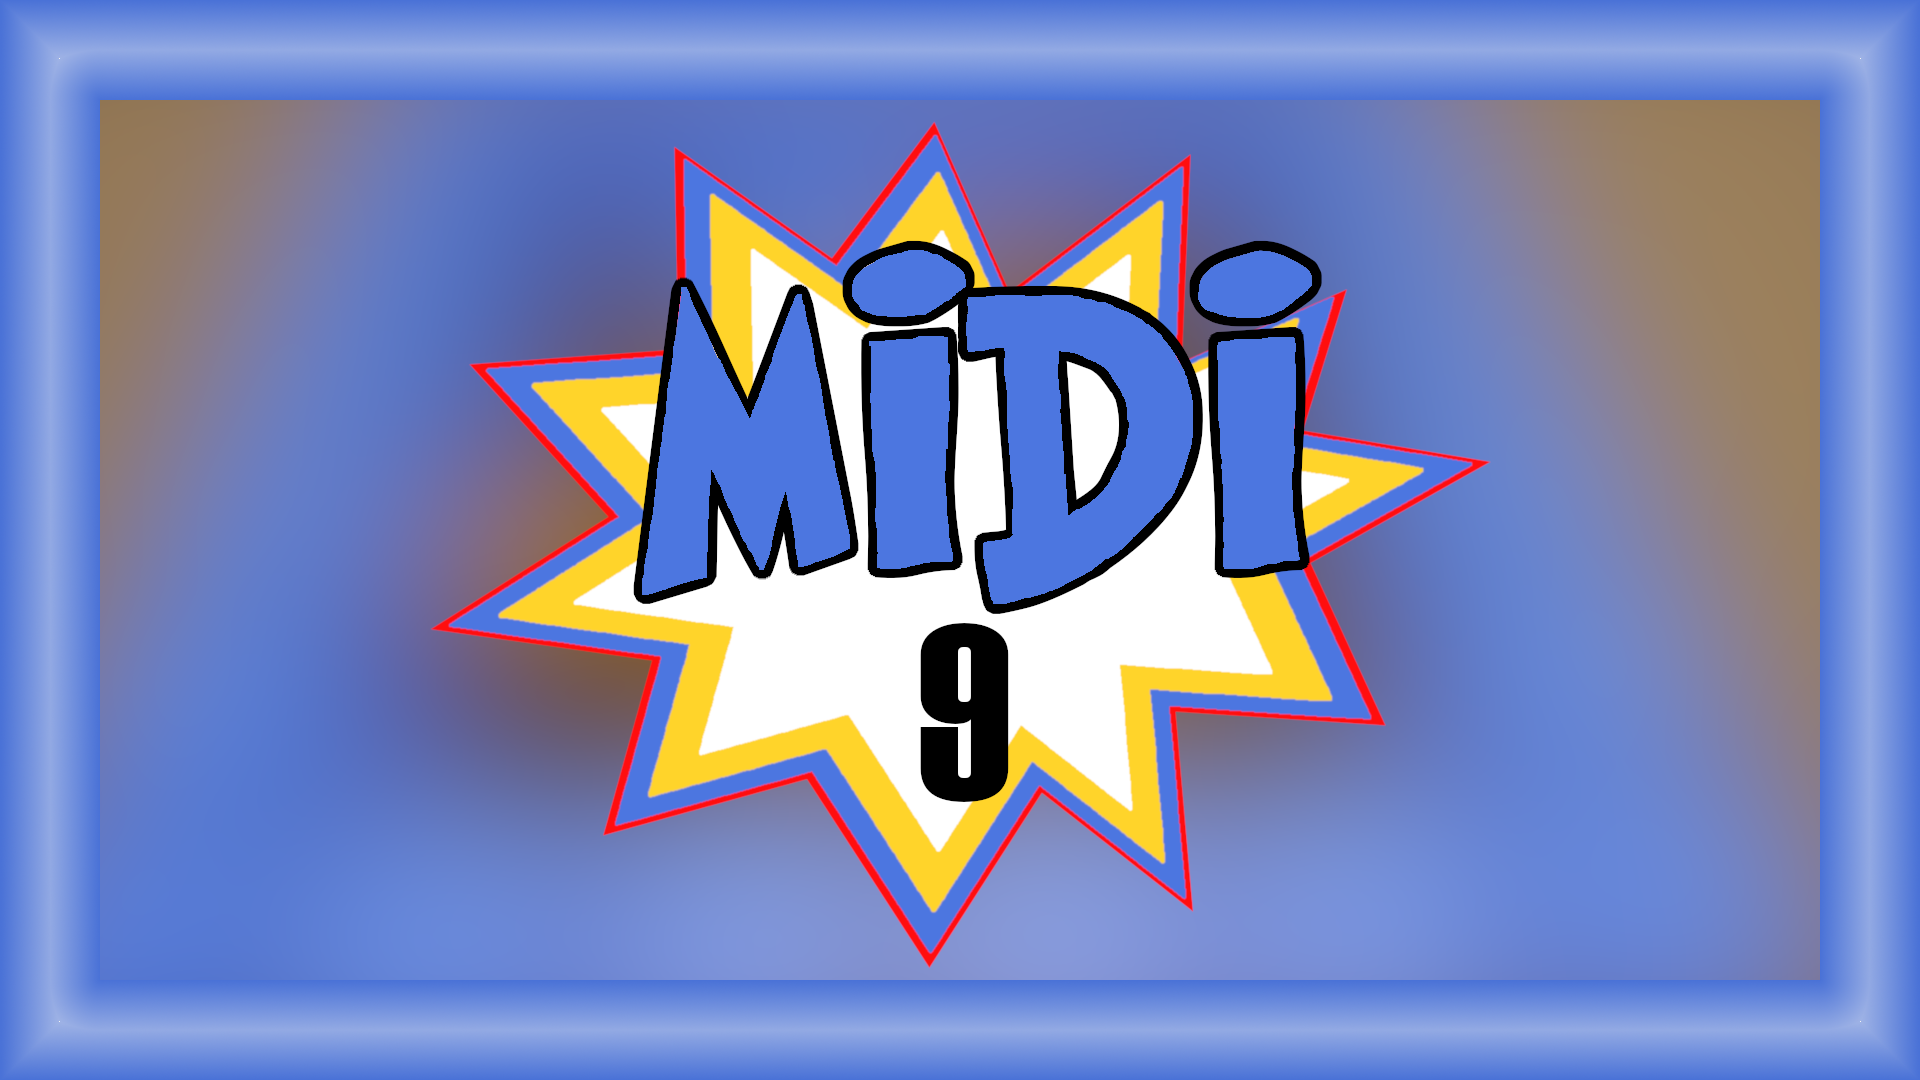 Midi 9